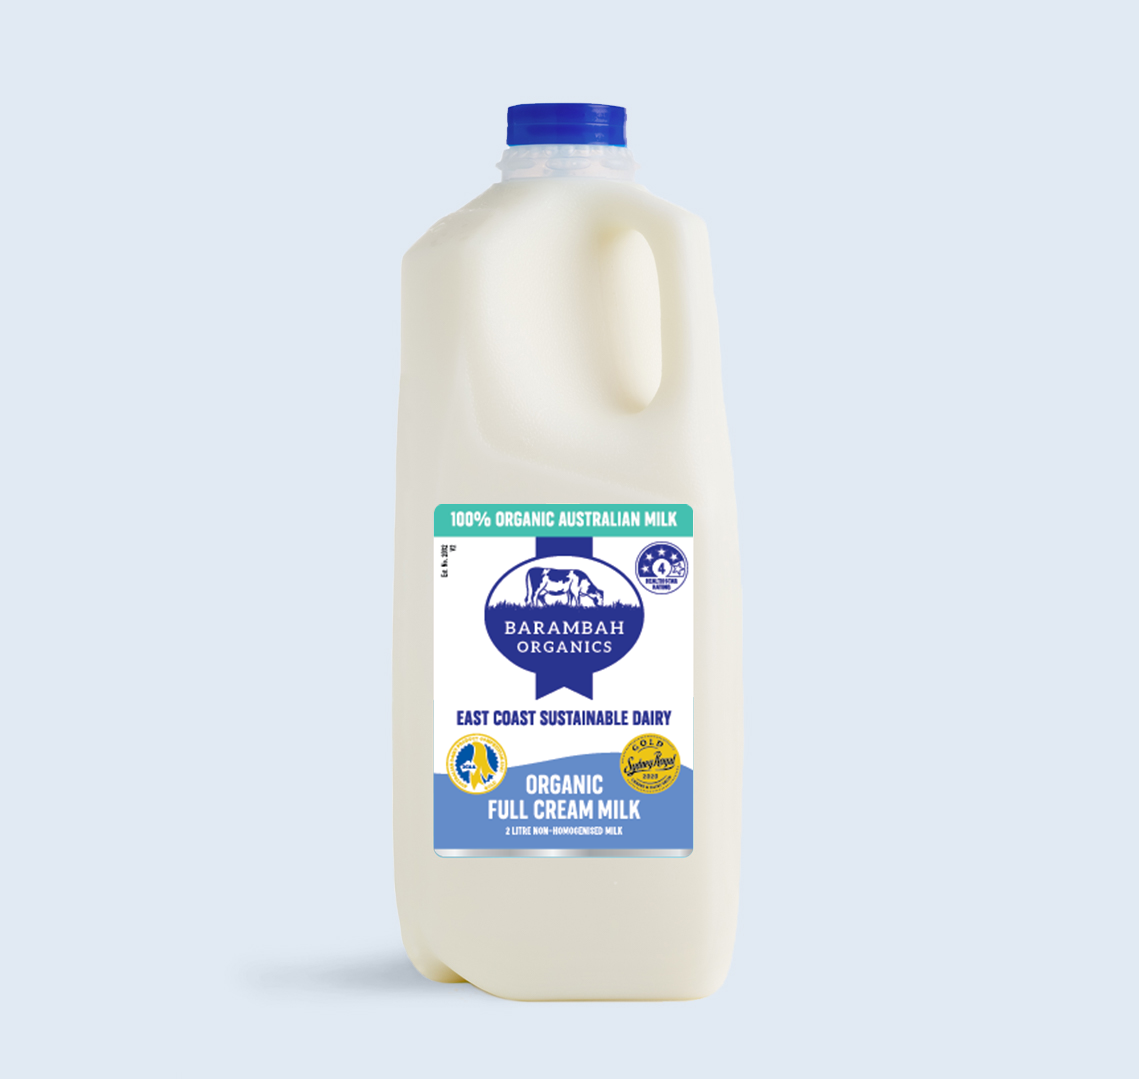 2 Liters of Full Cream Sustainable Milk - Organic Full Cream Milk - Barambah Organics